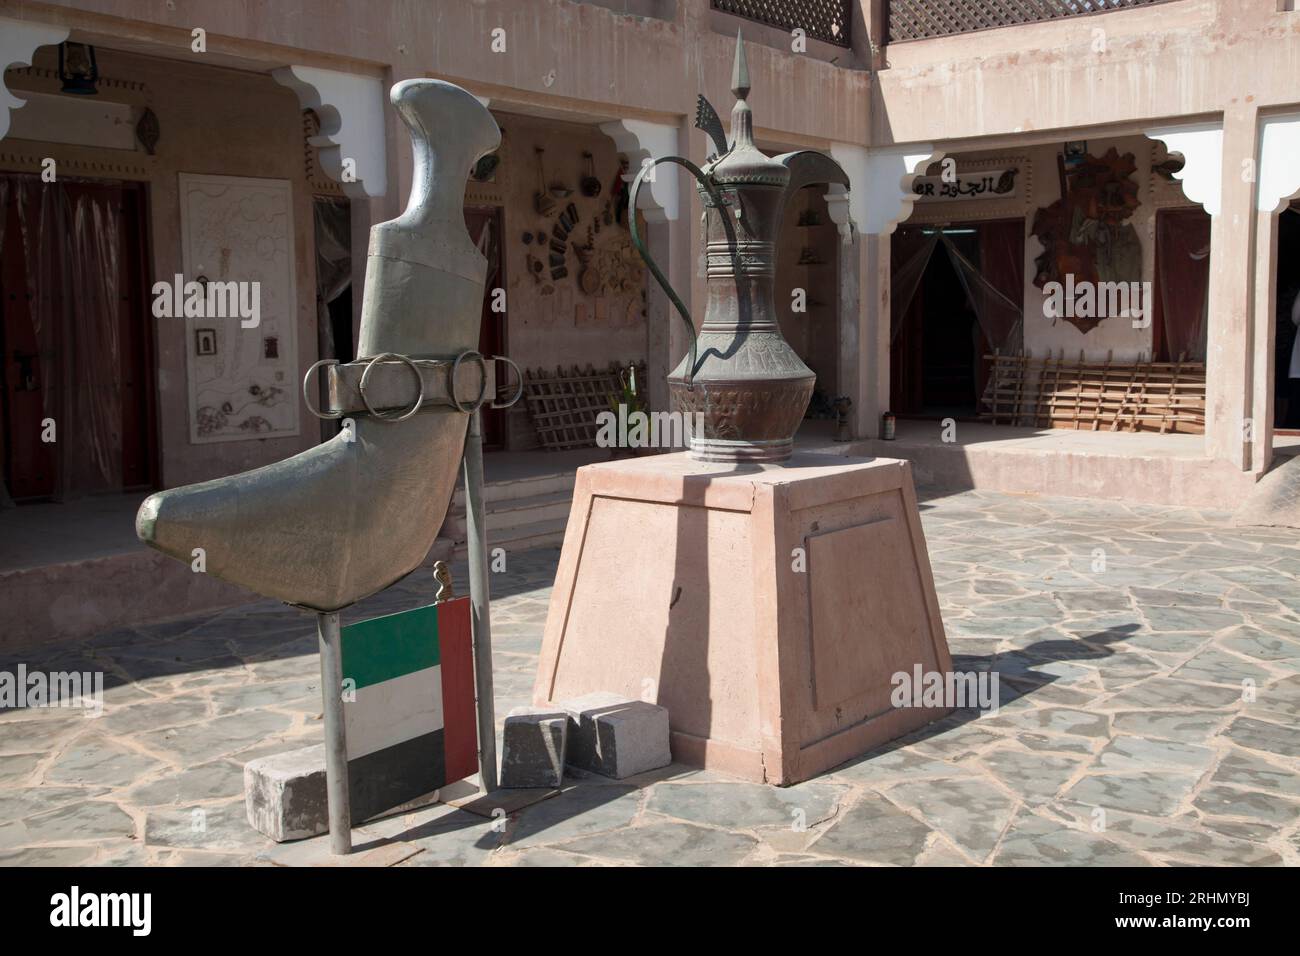 Emirati Arabi Uniti, Abu Dhabi, Heritage Village, statua di Khanjar e statua della caffettiera. Foto Stock